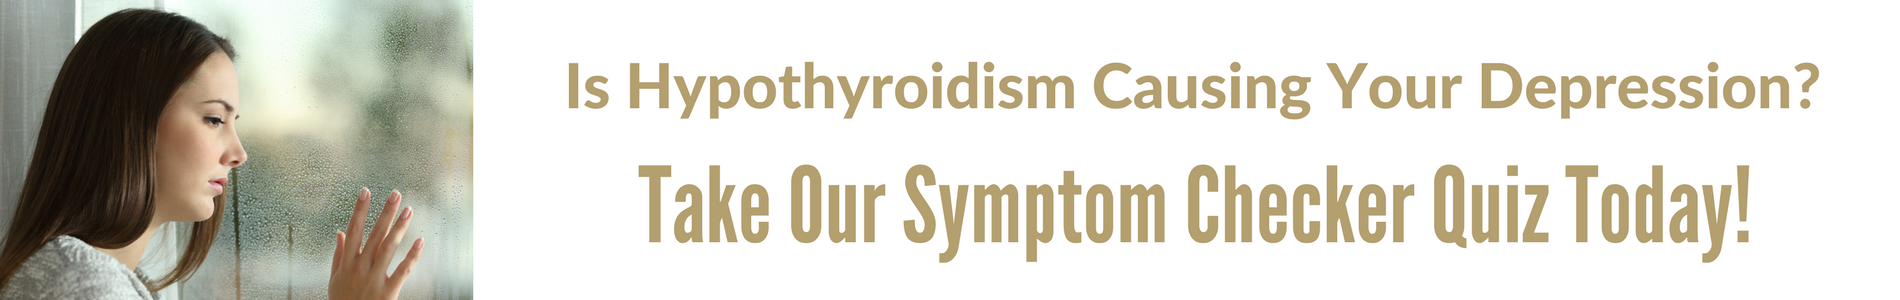 Depression Hypothyroidism CTA